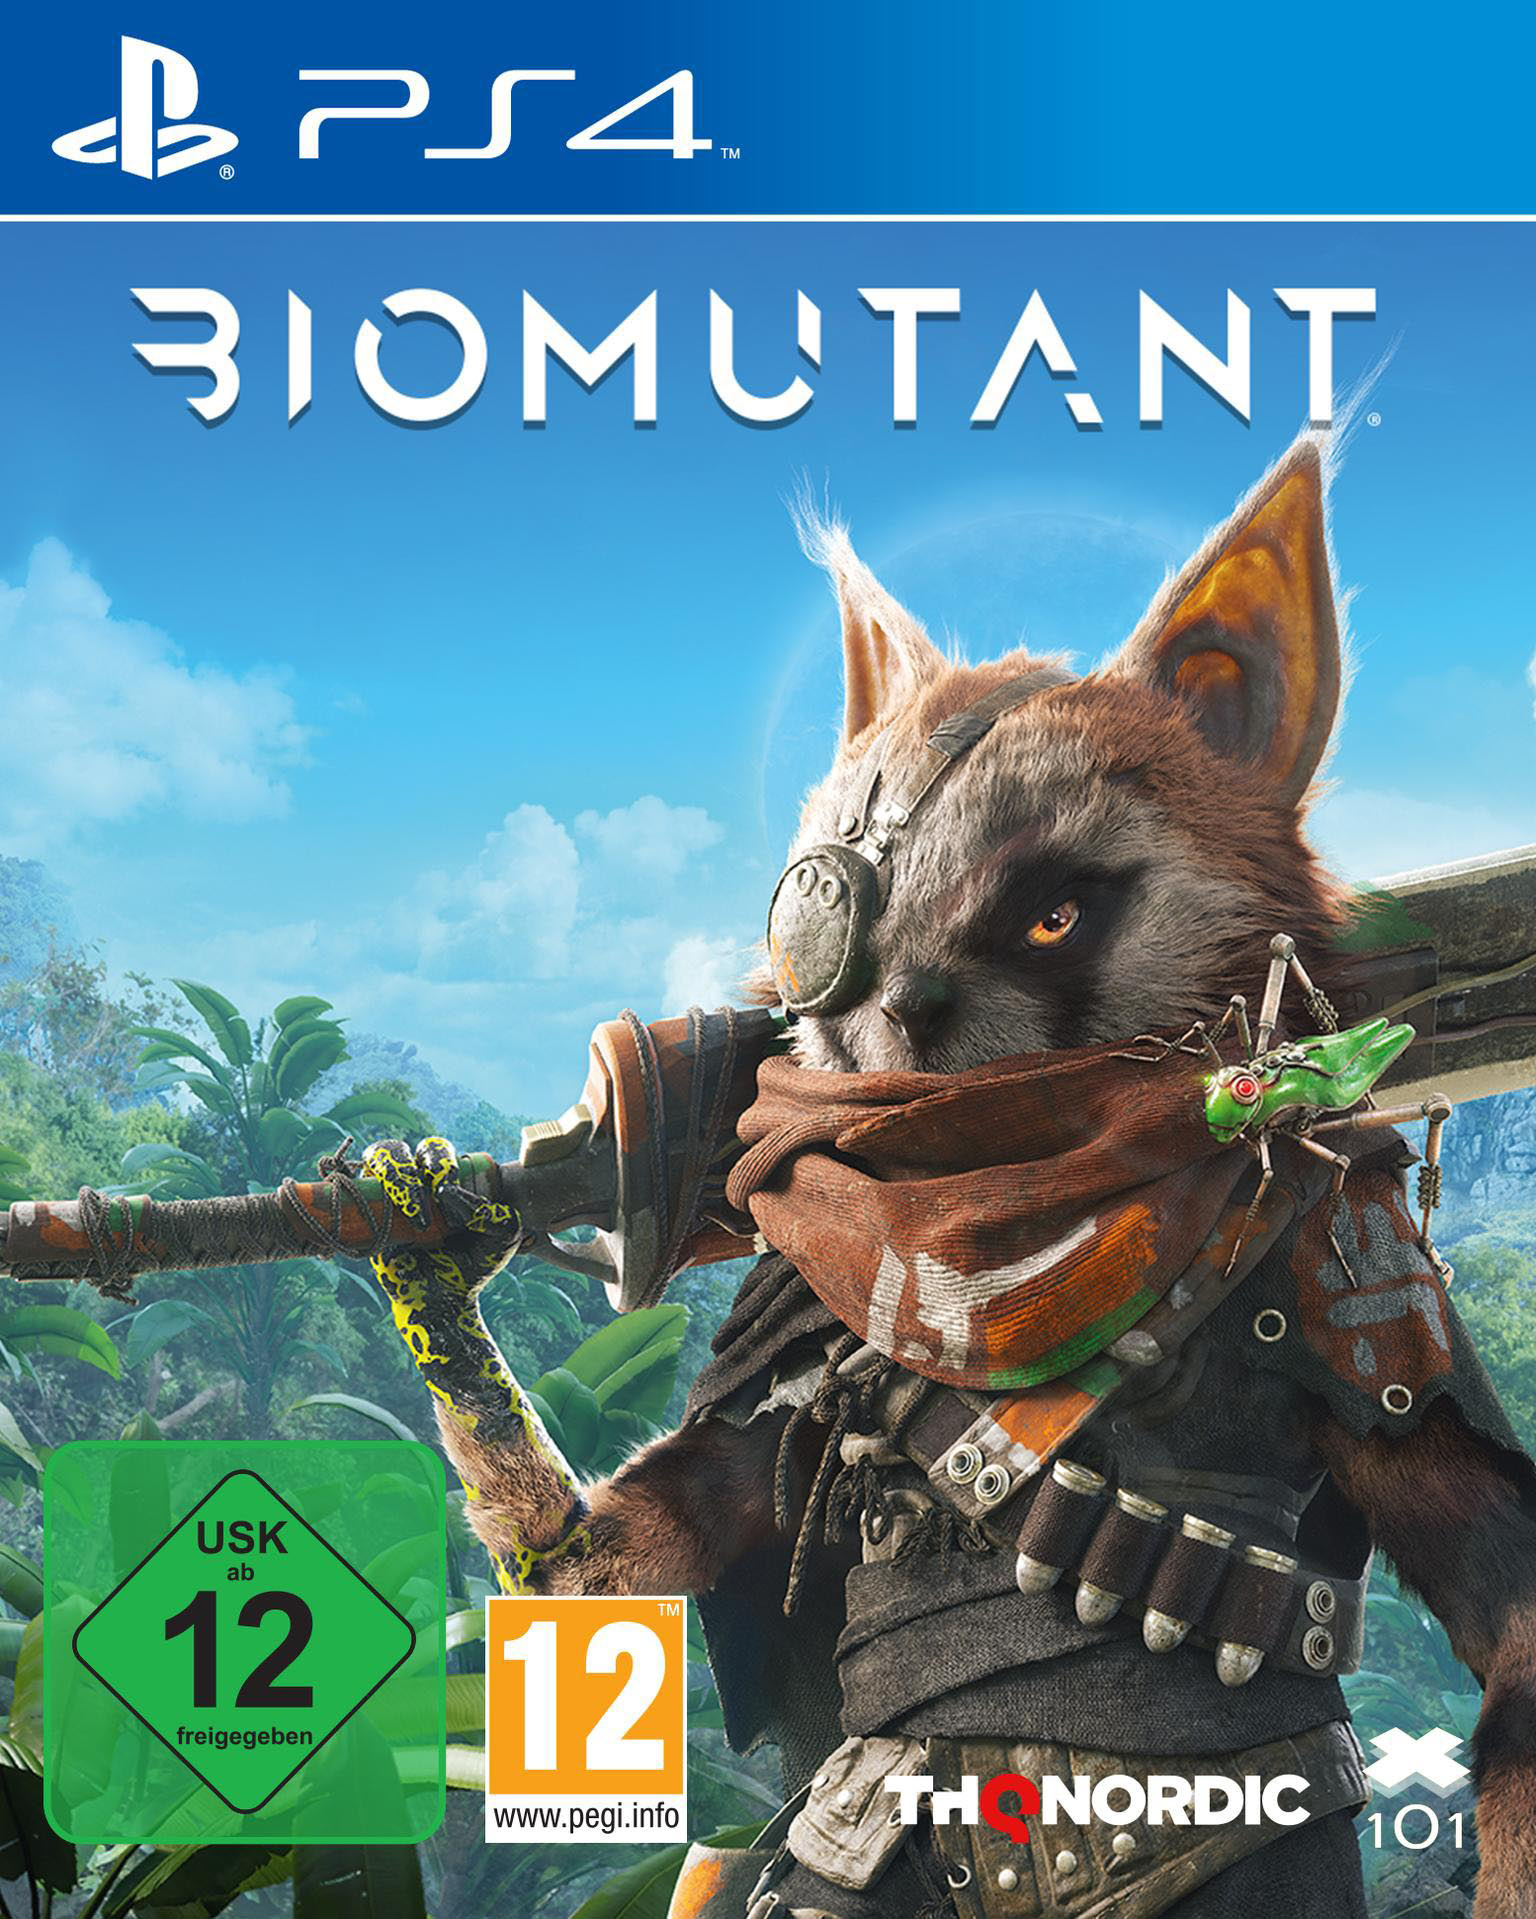 Biomutant - [PlayStation 4]